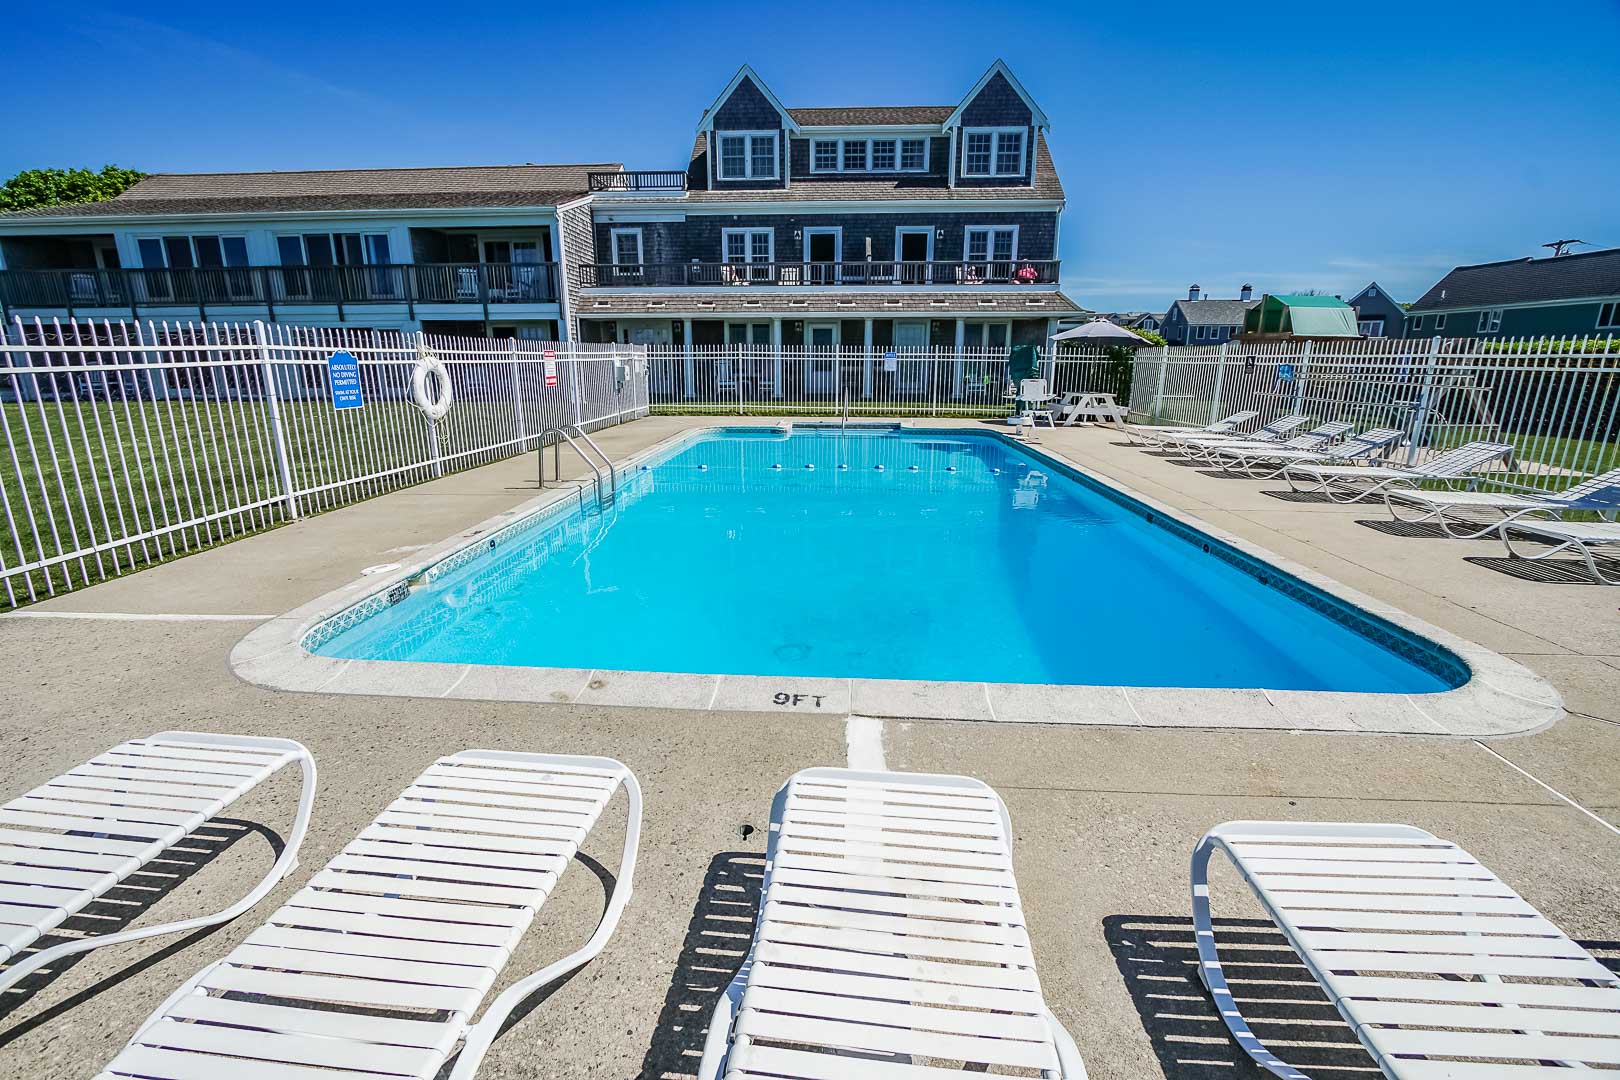 A refreshing pool view at VRI's Beachside Village Resort in Massachusetts.